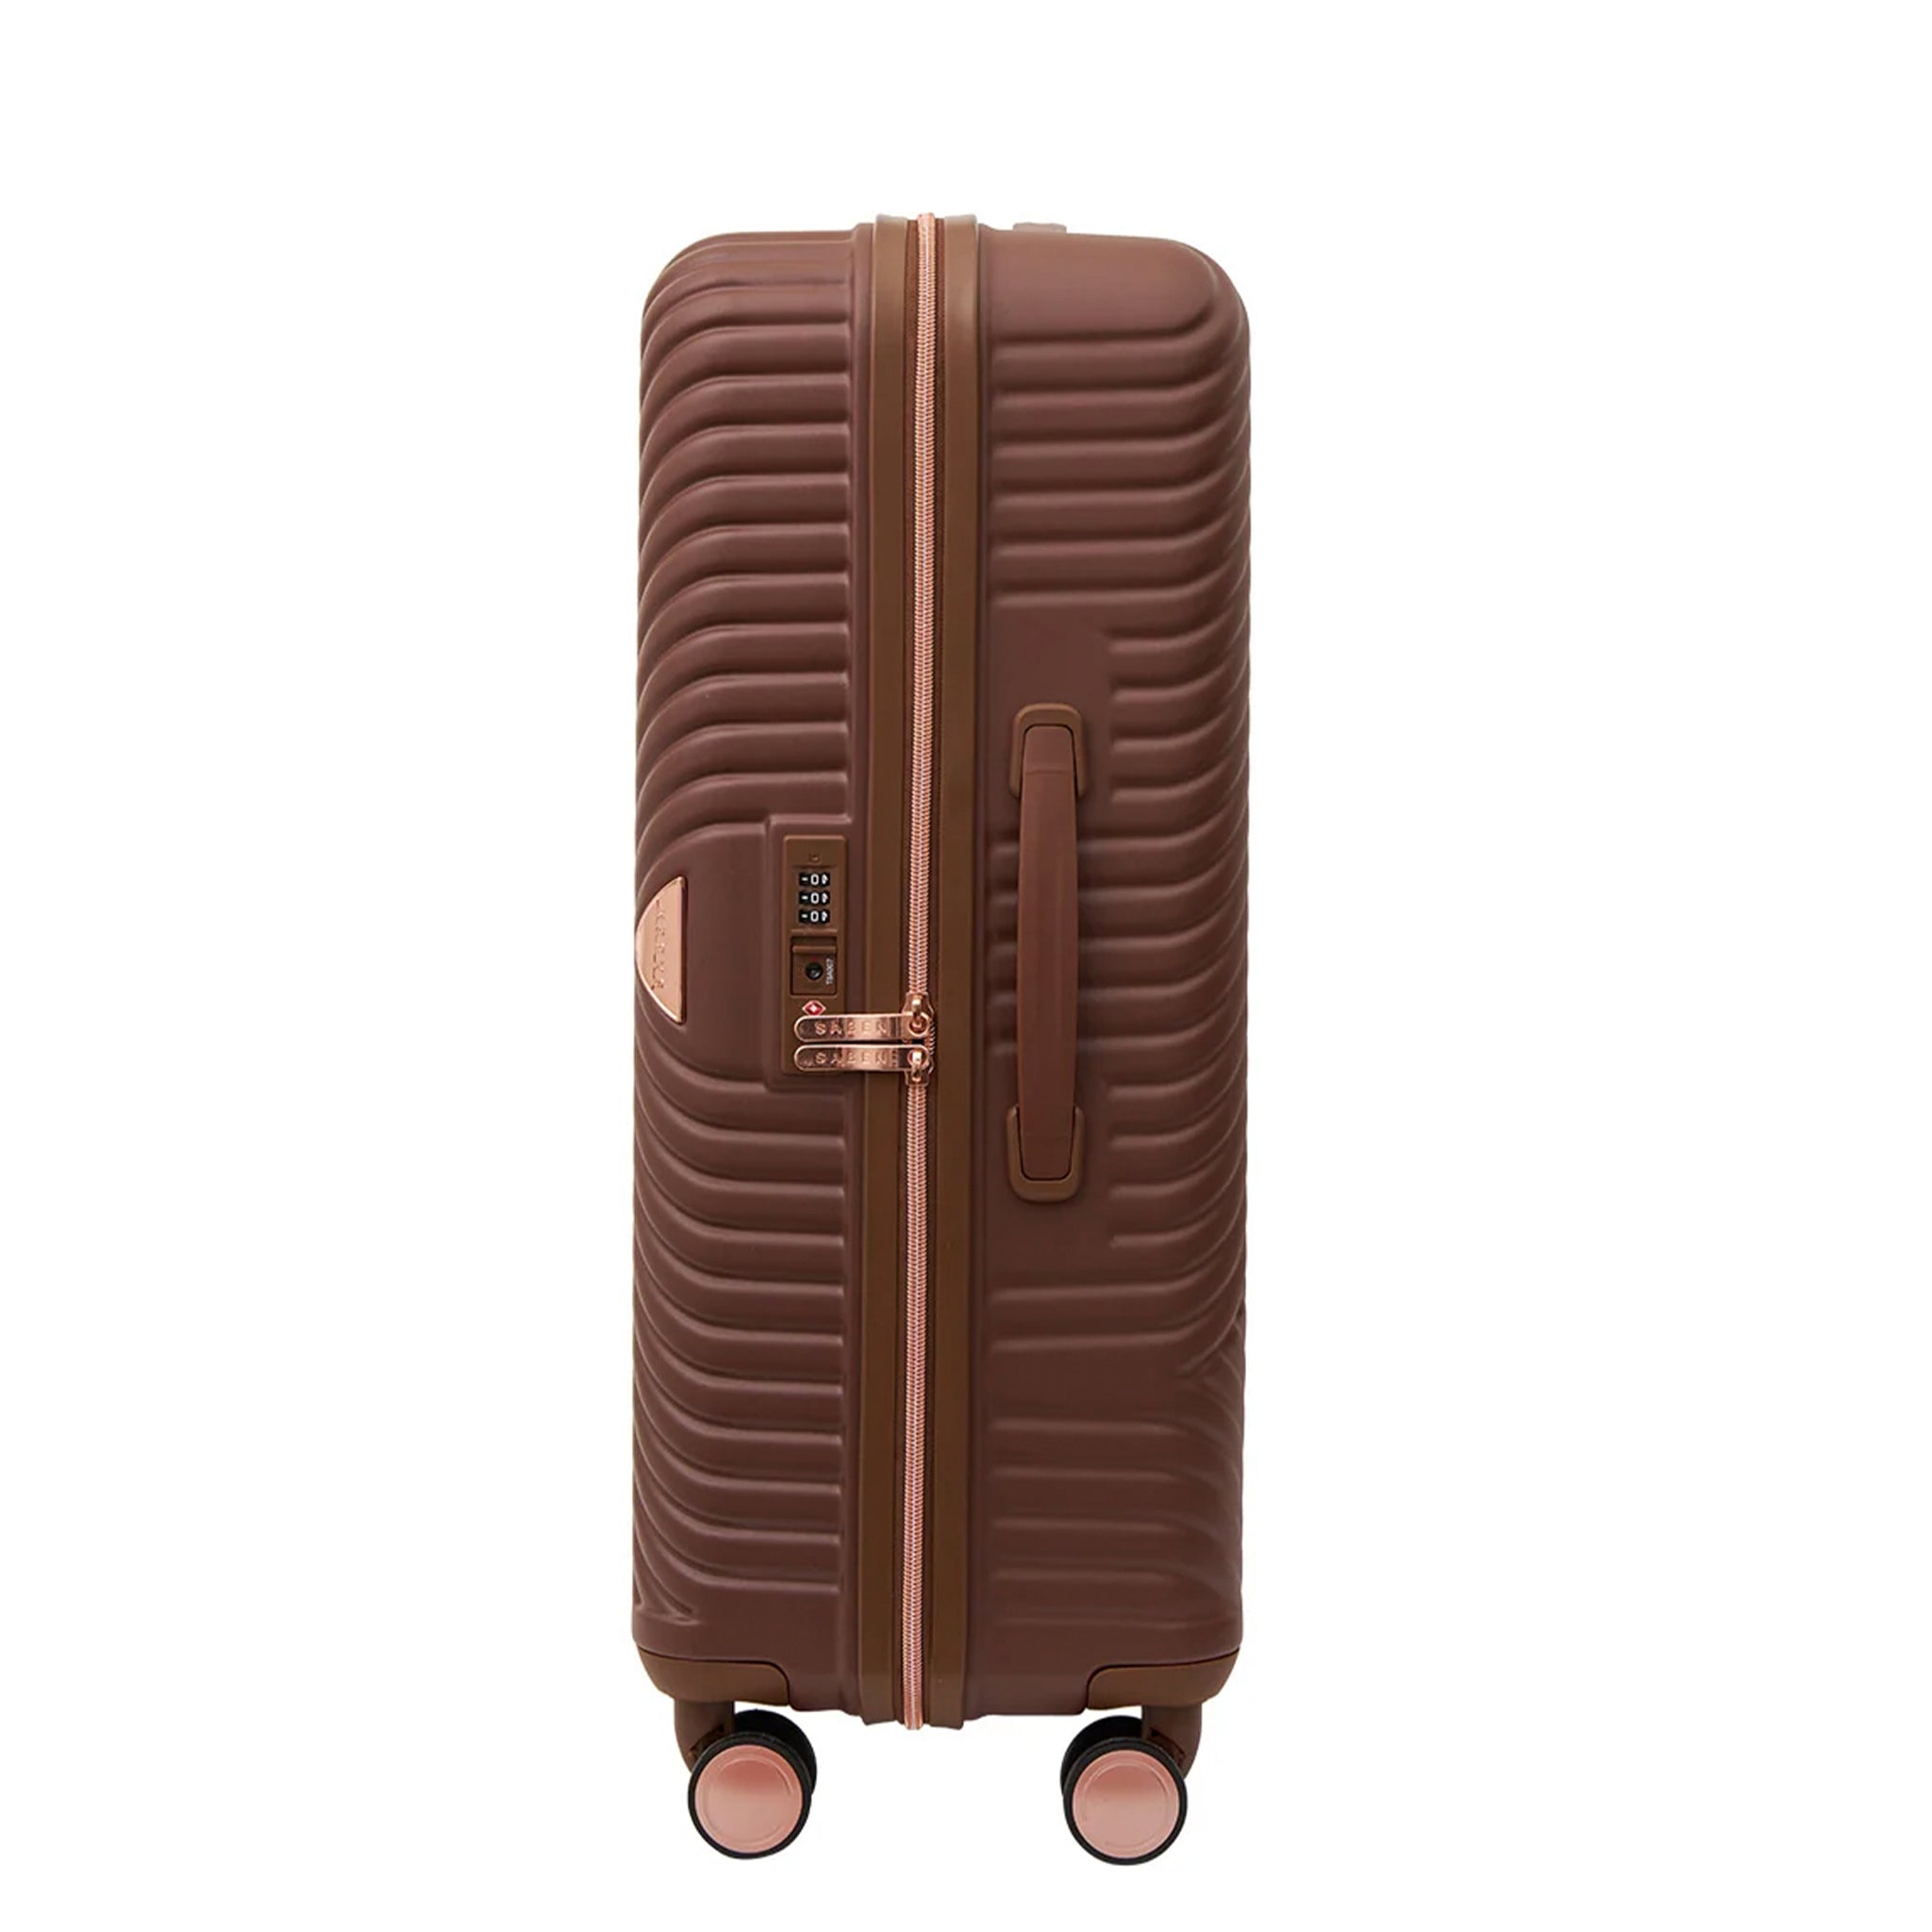 Saben Suitcase Set of Cabin, Medium, Large - Nutshell